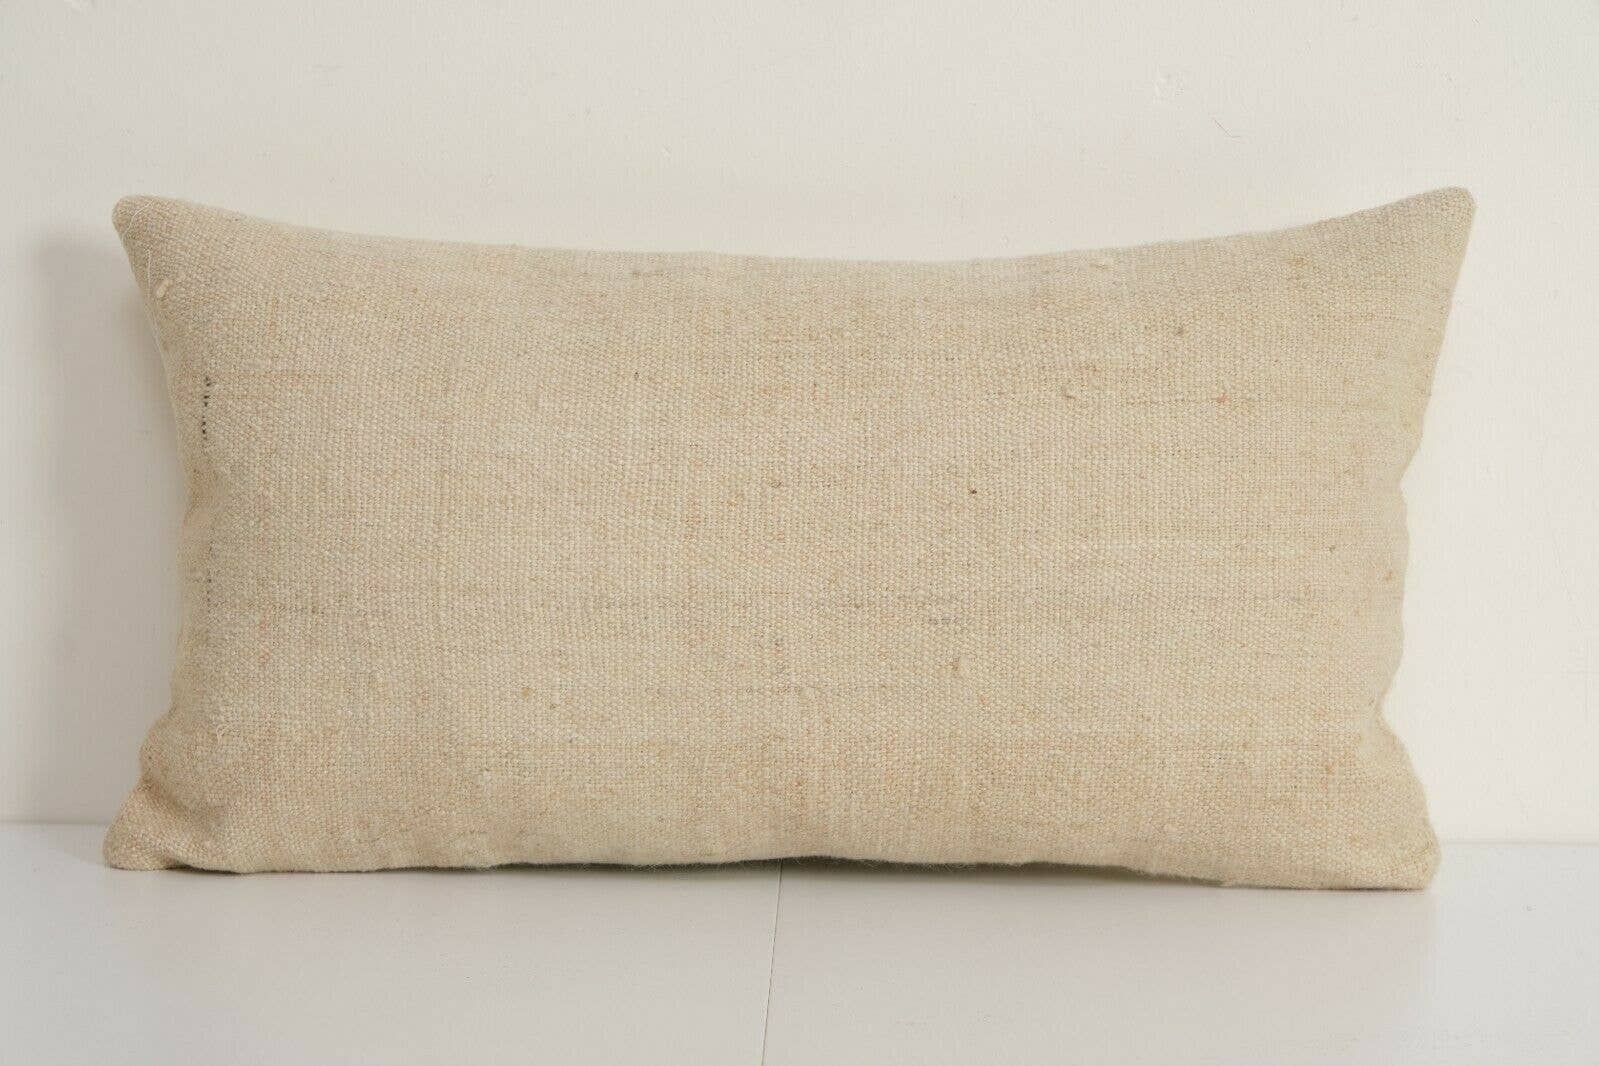 12" x 20" vintage kilim pillow striped lumbar